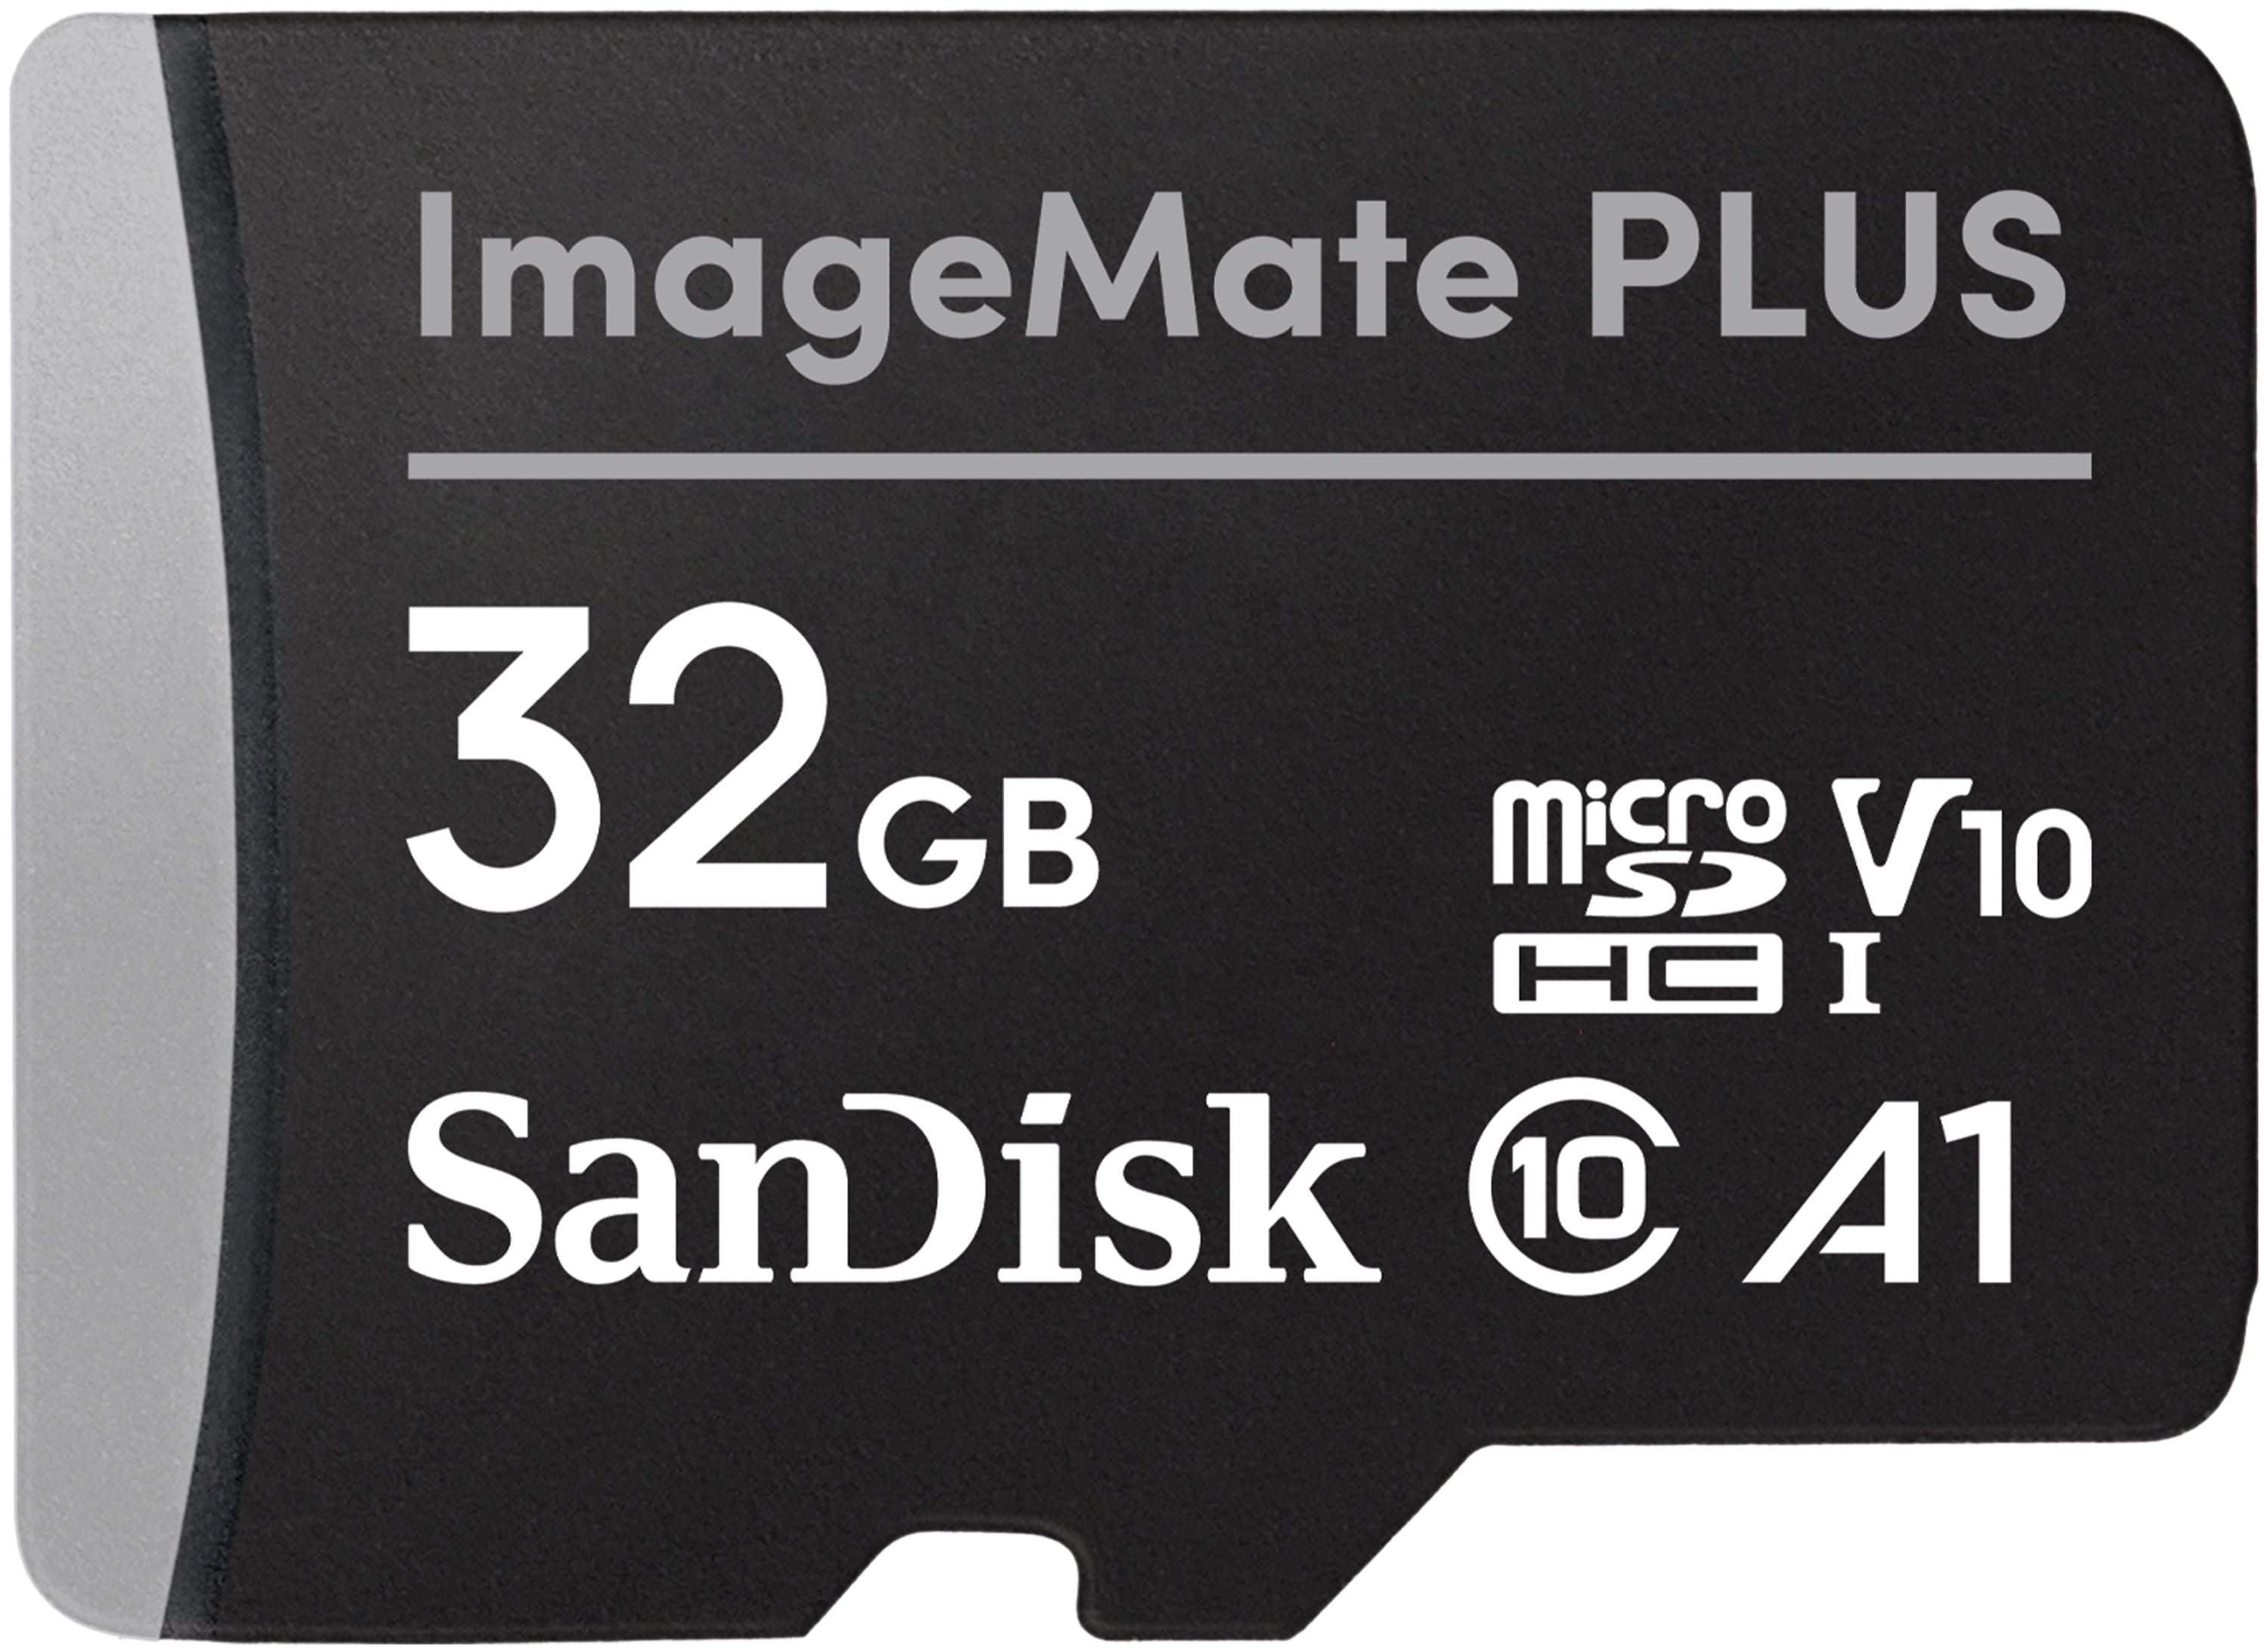 32GB ImageMate PLUS microSDHC UHS-1 Memory Card with Adapter - 130MB/s, U1, V10, HD, A1 SD Card - SDSQUB3-032G-AWCKA - Walmart.com